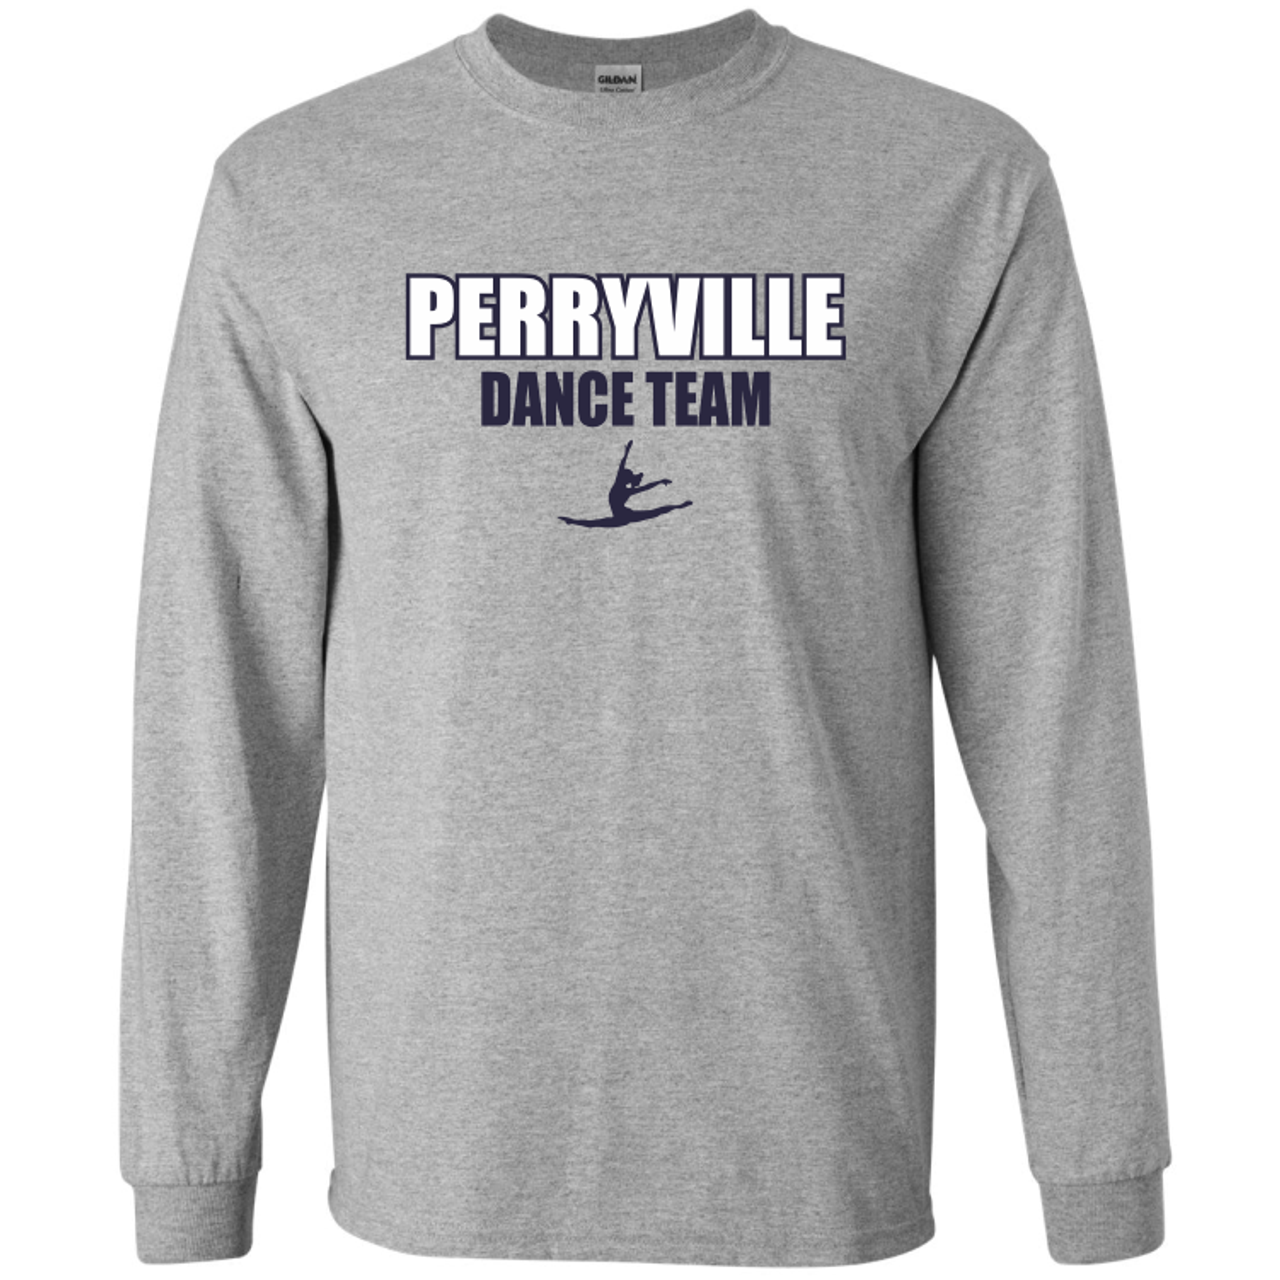 Perryville MS Dance Team T-Shirt, Gray